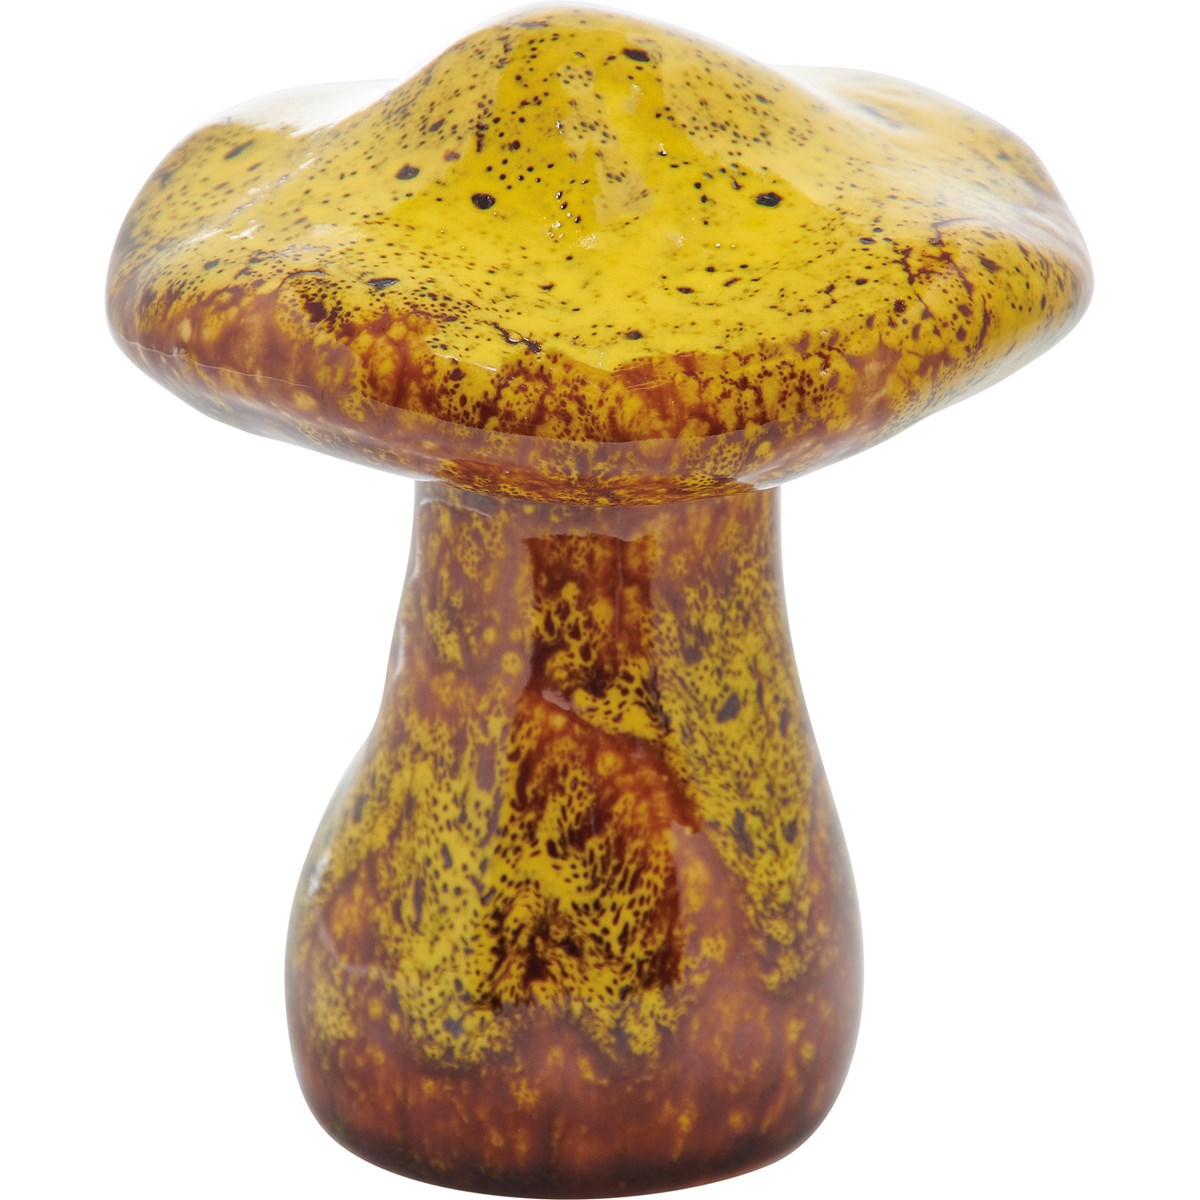 medium yellow mushroom on a white background.